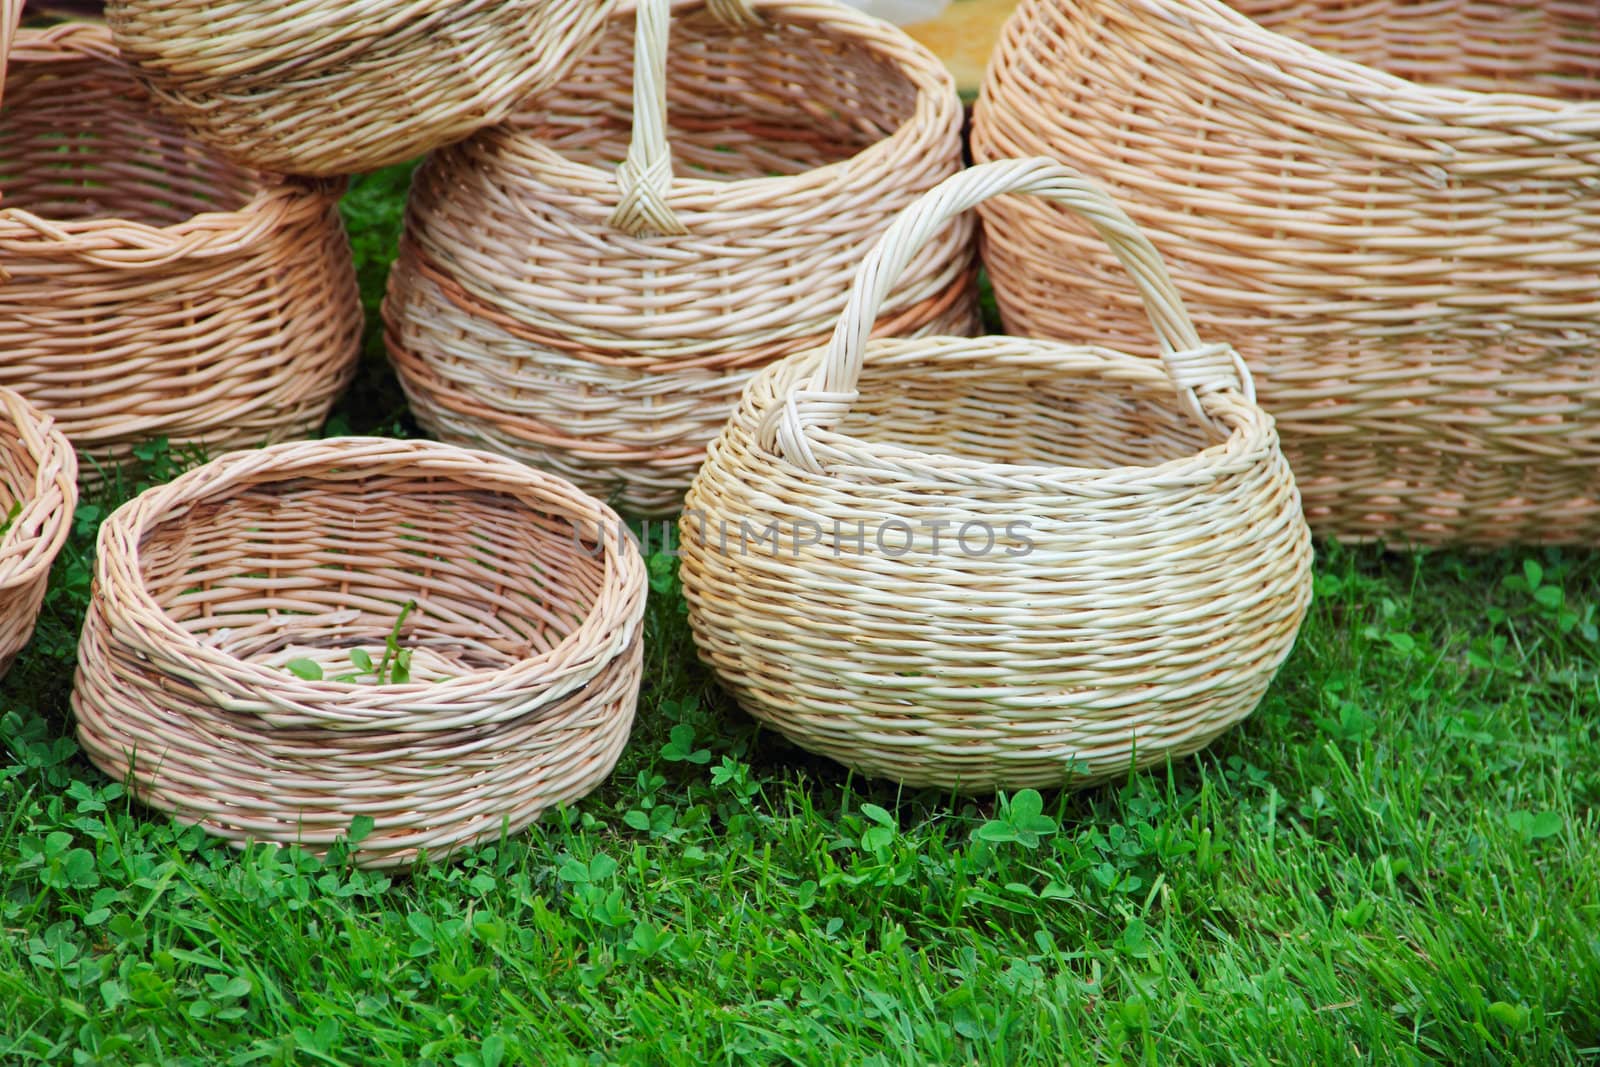 Many baskets standing on green grass outdoors fair